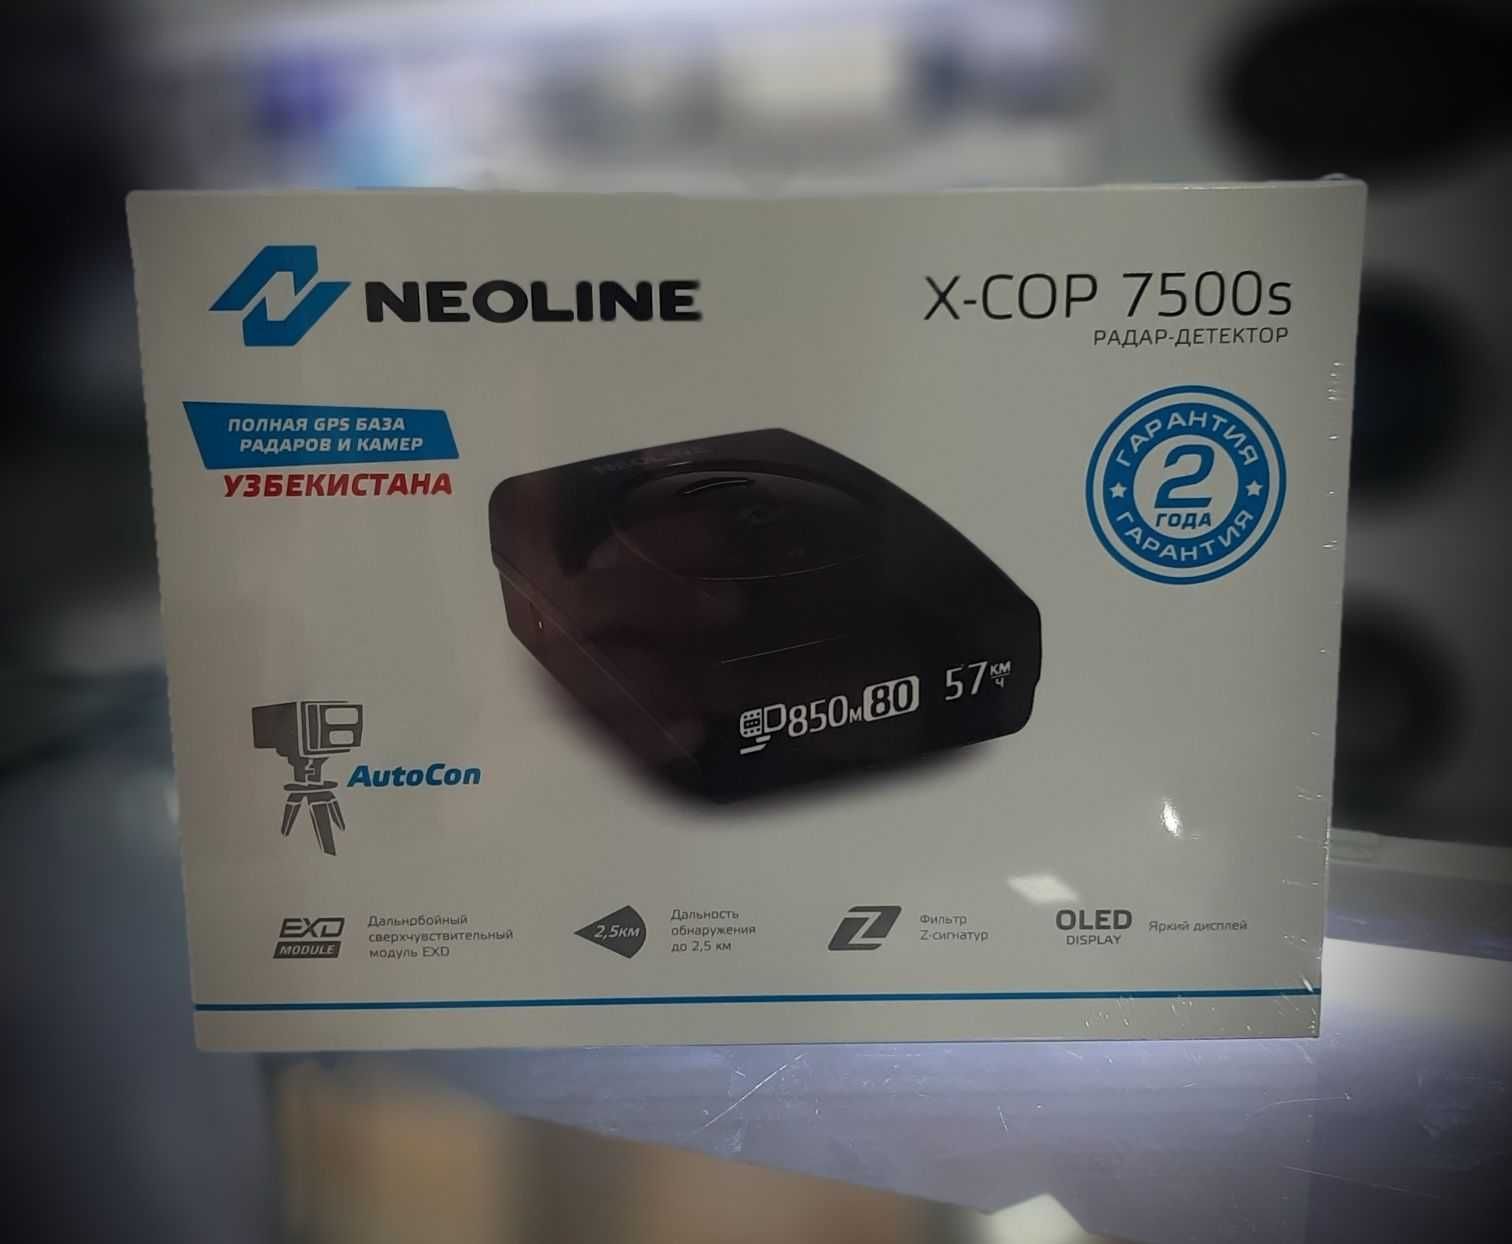 Neoline 7500s оригинал 100%. Доставка прошивка сервис установка беспла